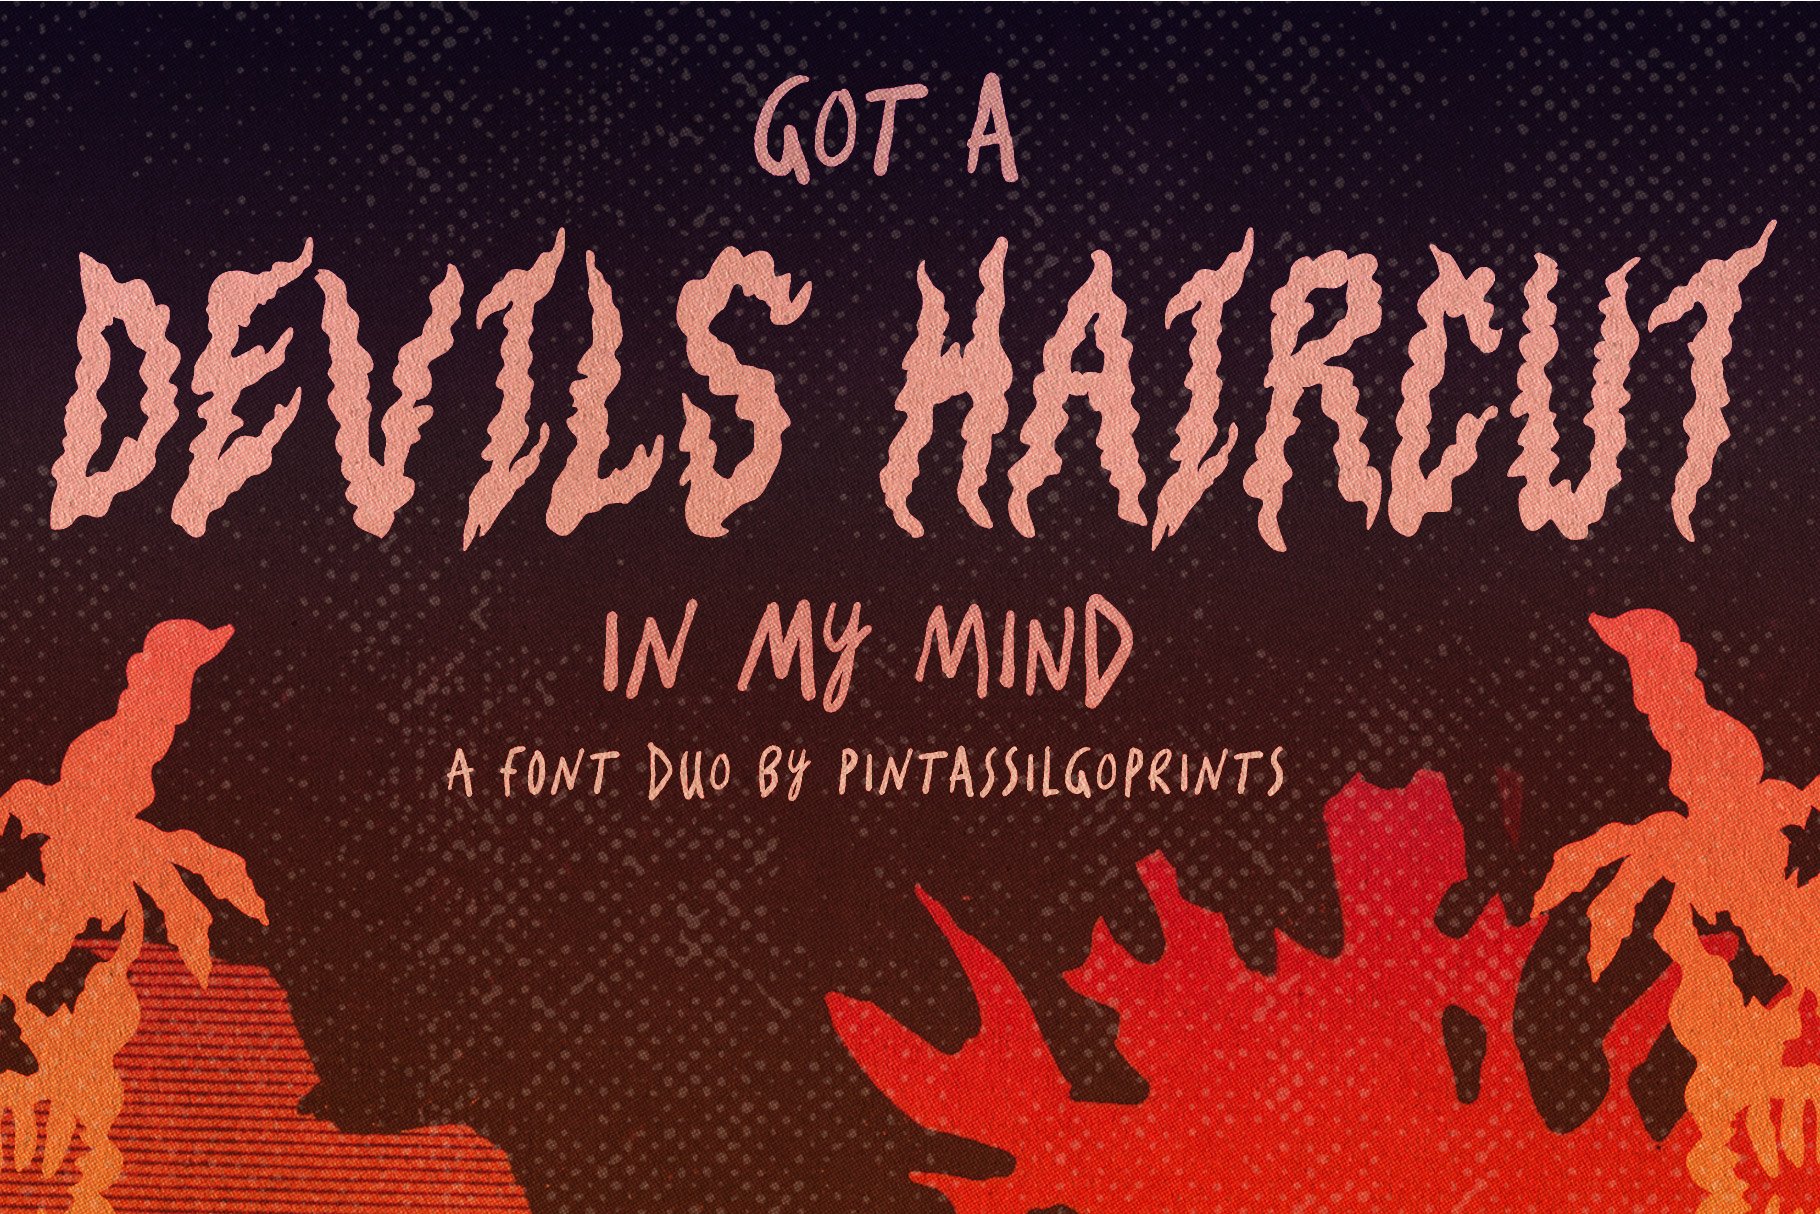 Devils Haircut | Explosive font duo cover image.